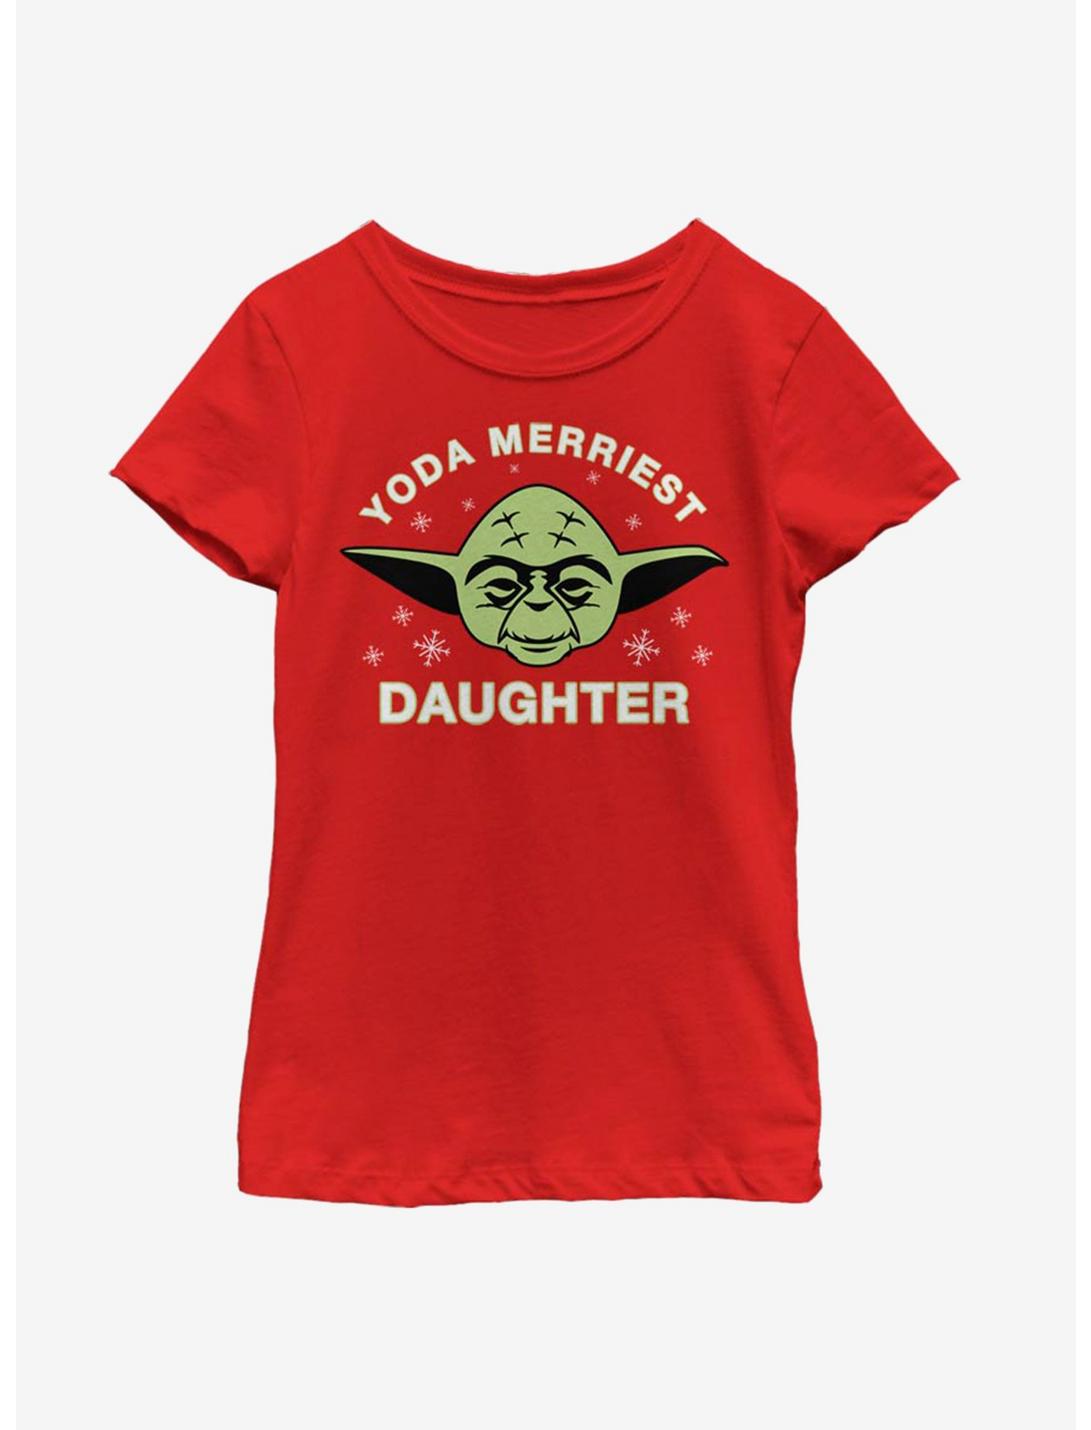 Star Wars Yoda Merriest Daughter Youth Girls T-Shirt, RED, hi-res